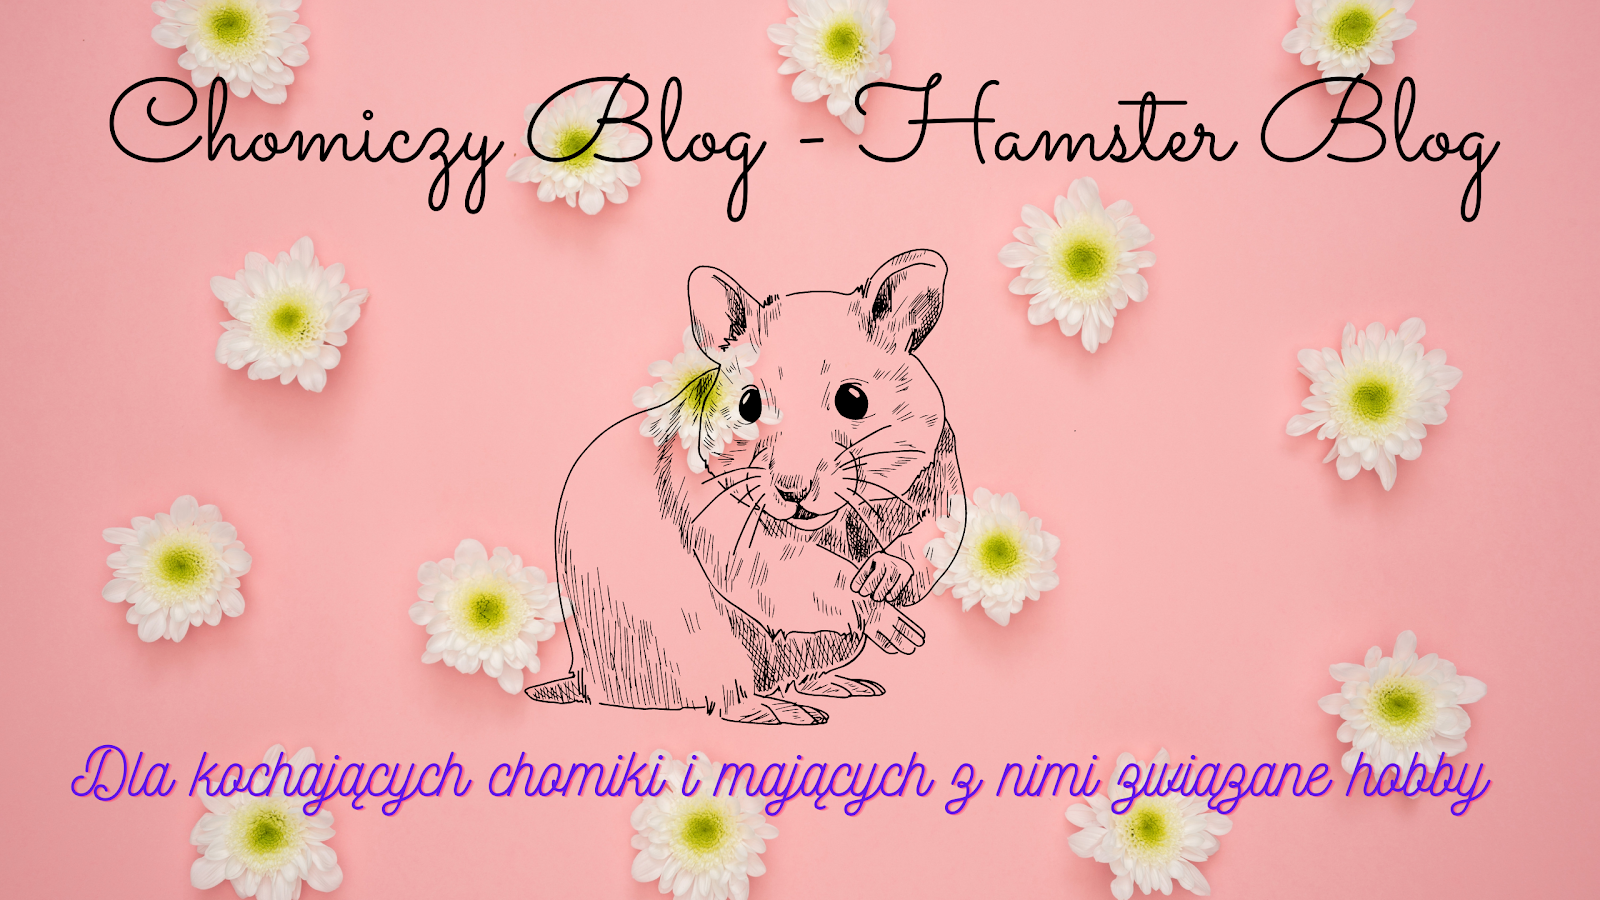 Chomiczy blog - Hamster Blog